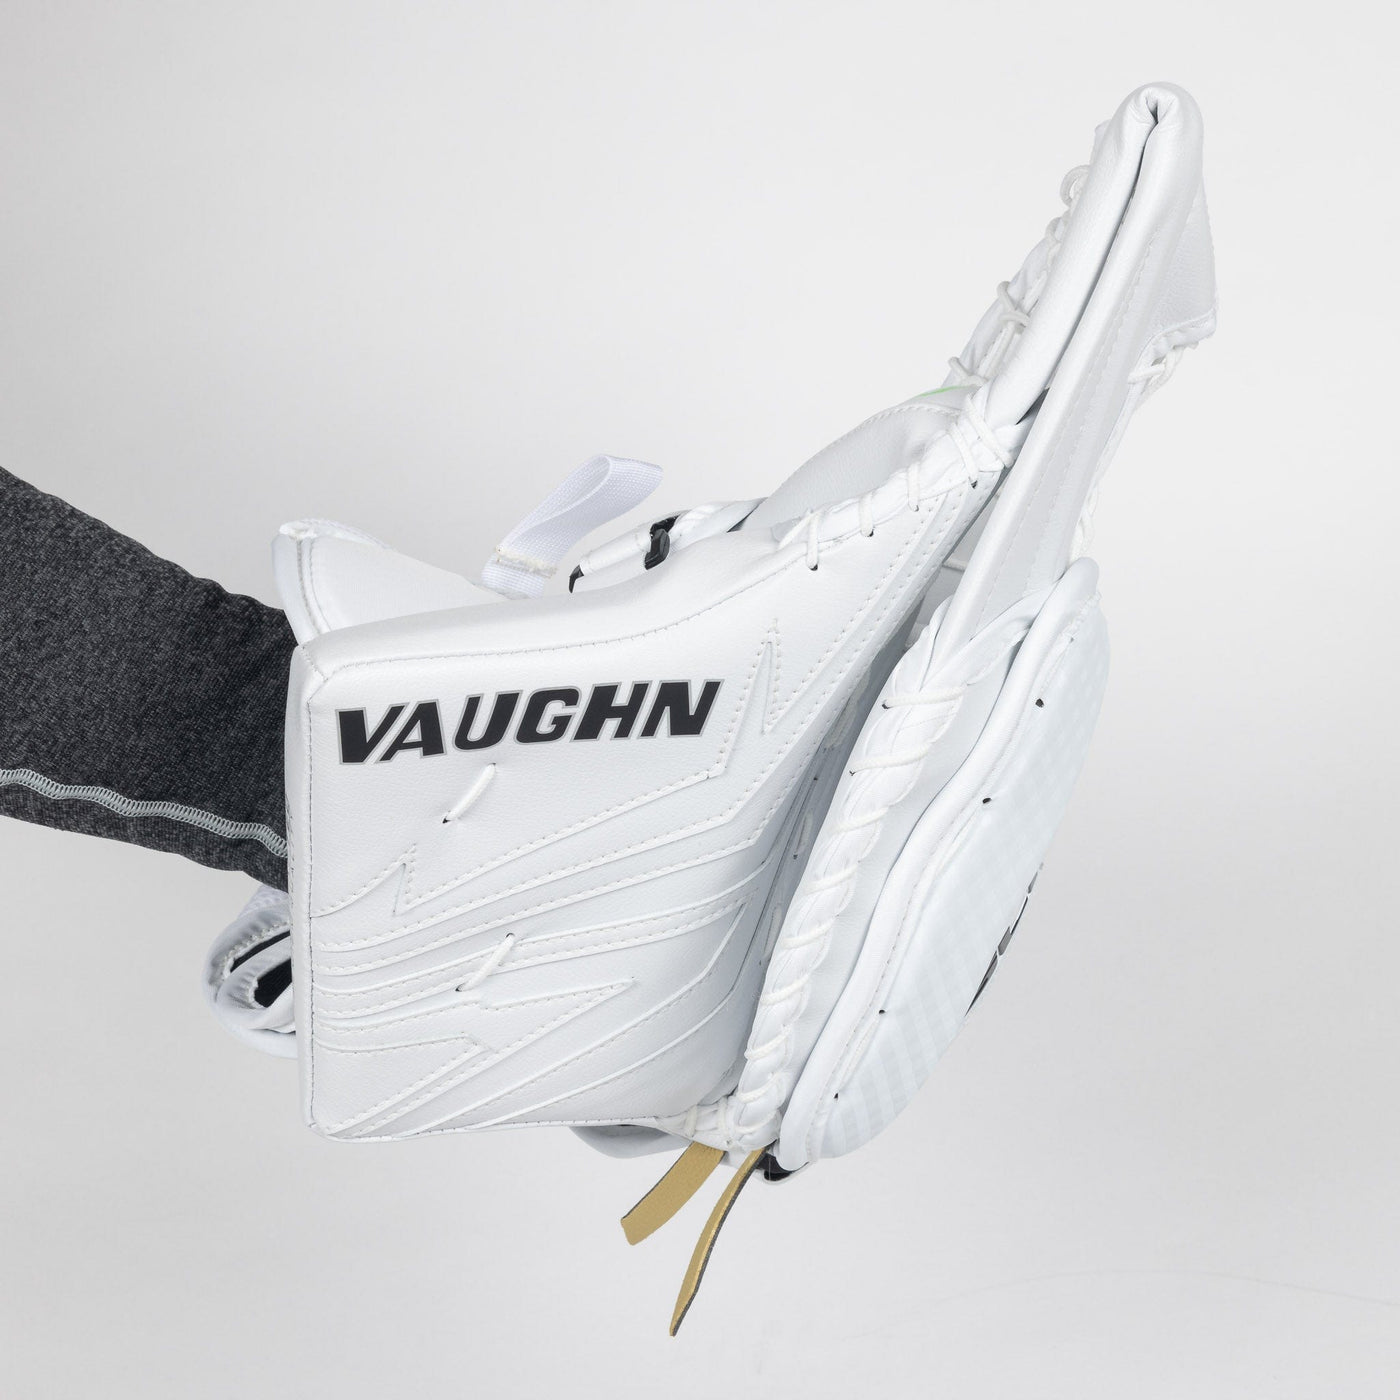 Vaughn Ventus SLR4 Pro Carbon Senior Goalie Catcher - 60 Degree - TheHockeyShop.com